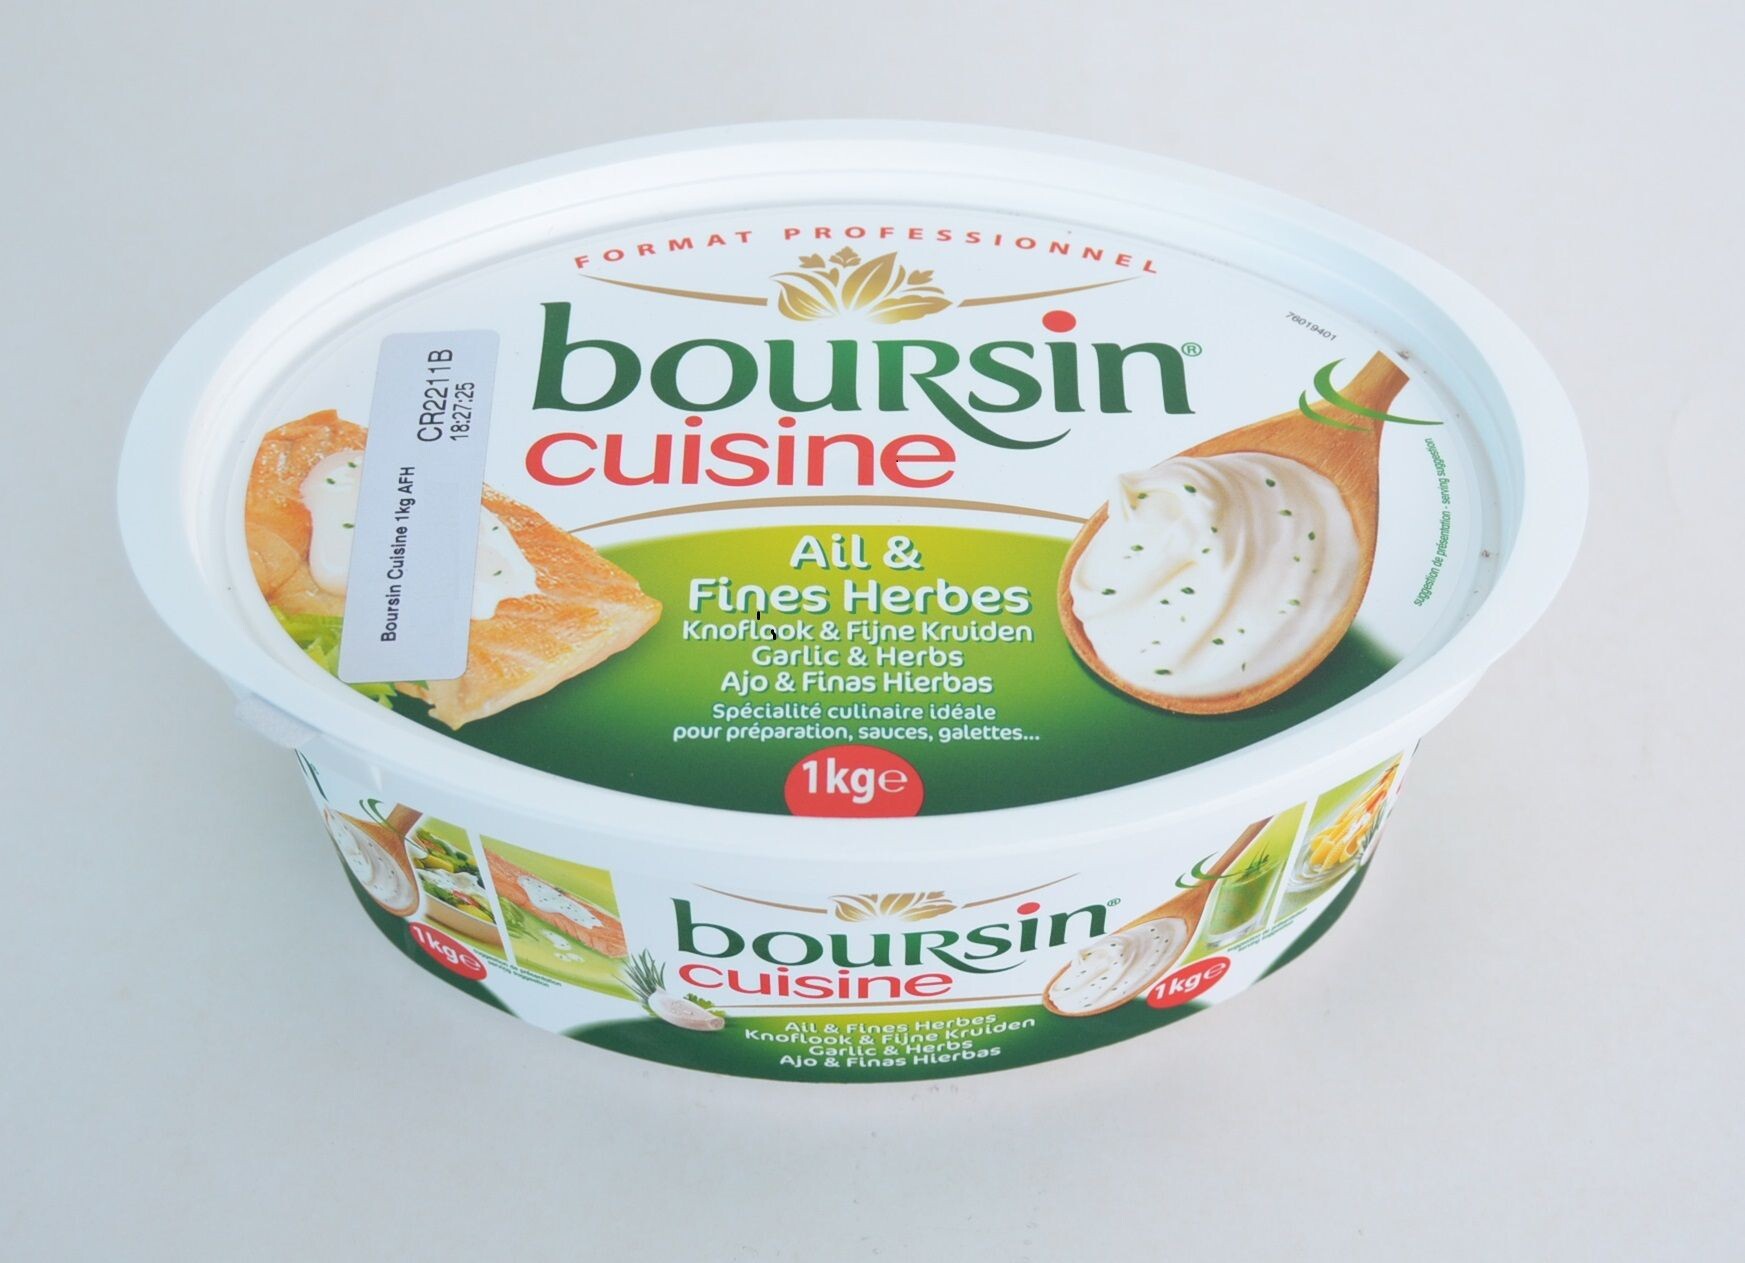 Boursin cuisine 1kg garlic & herbs